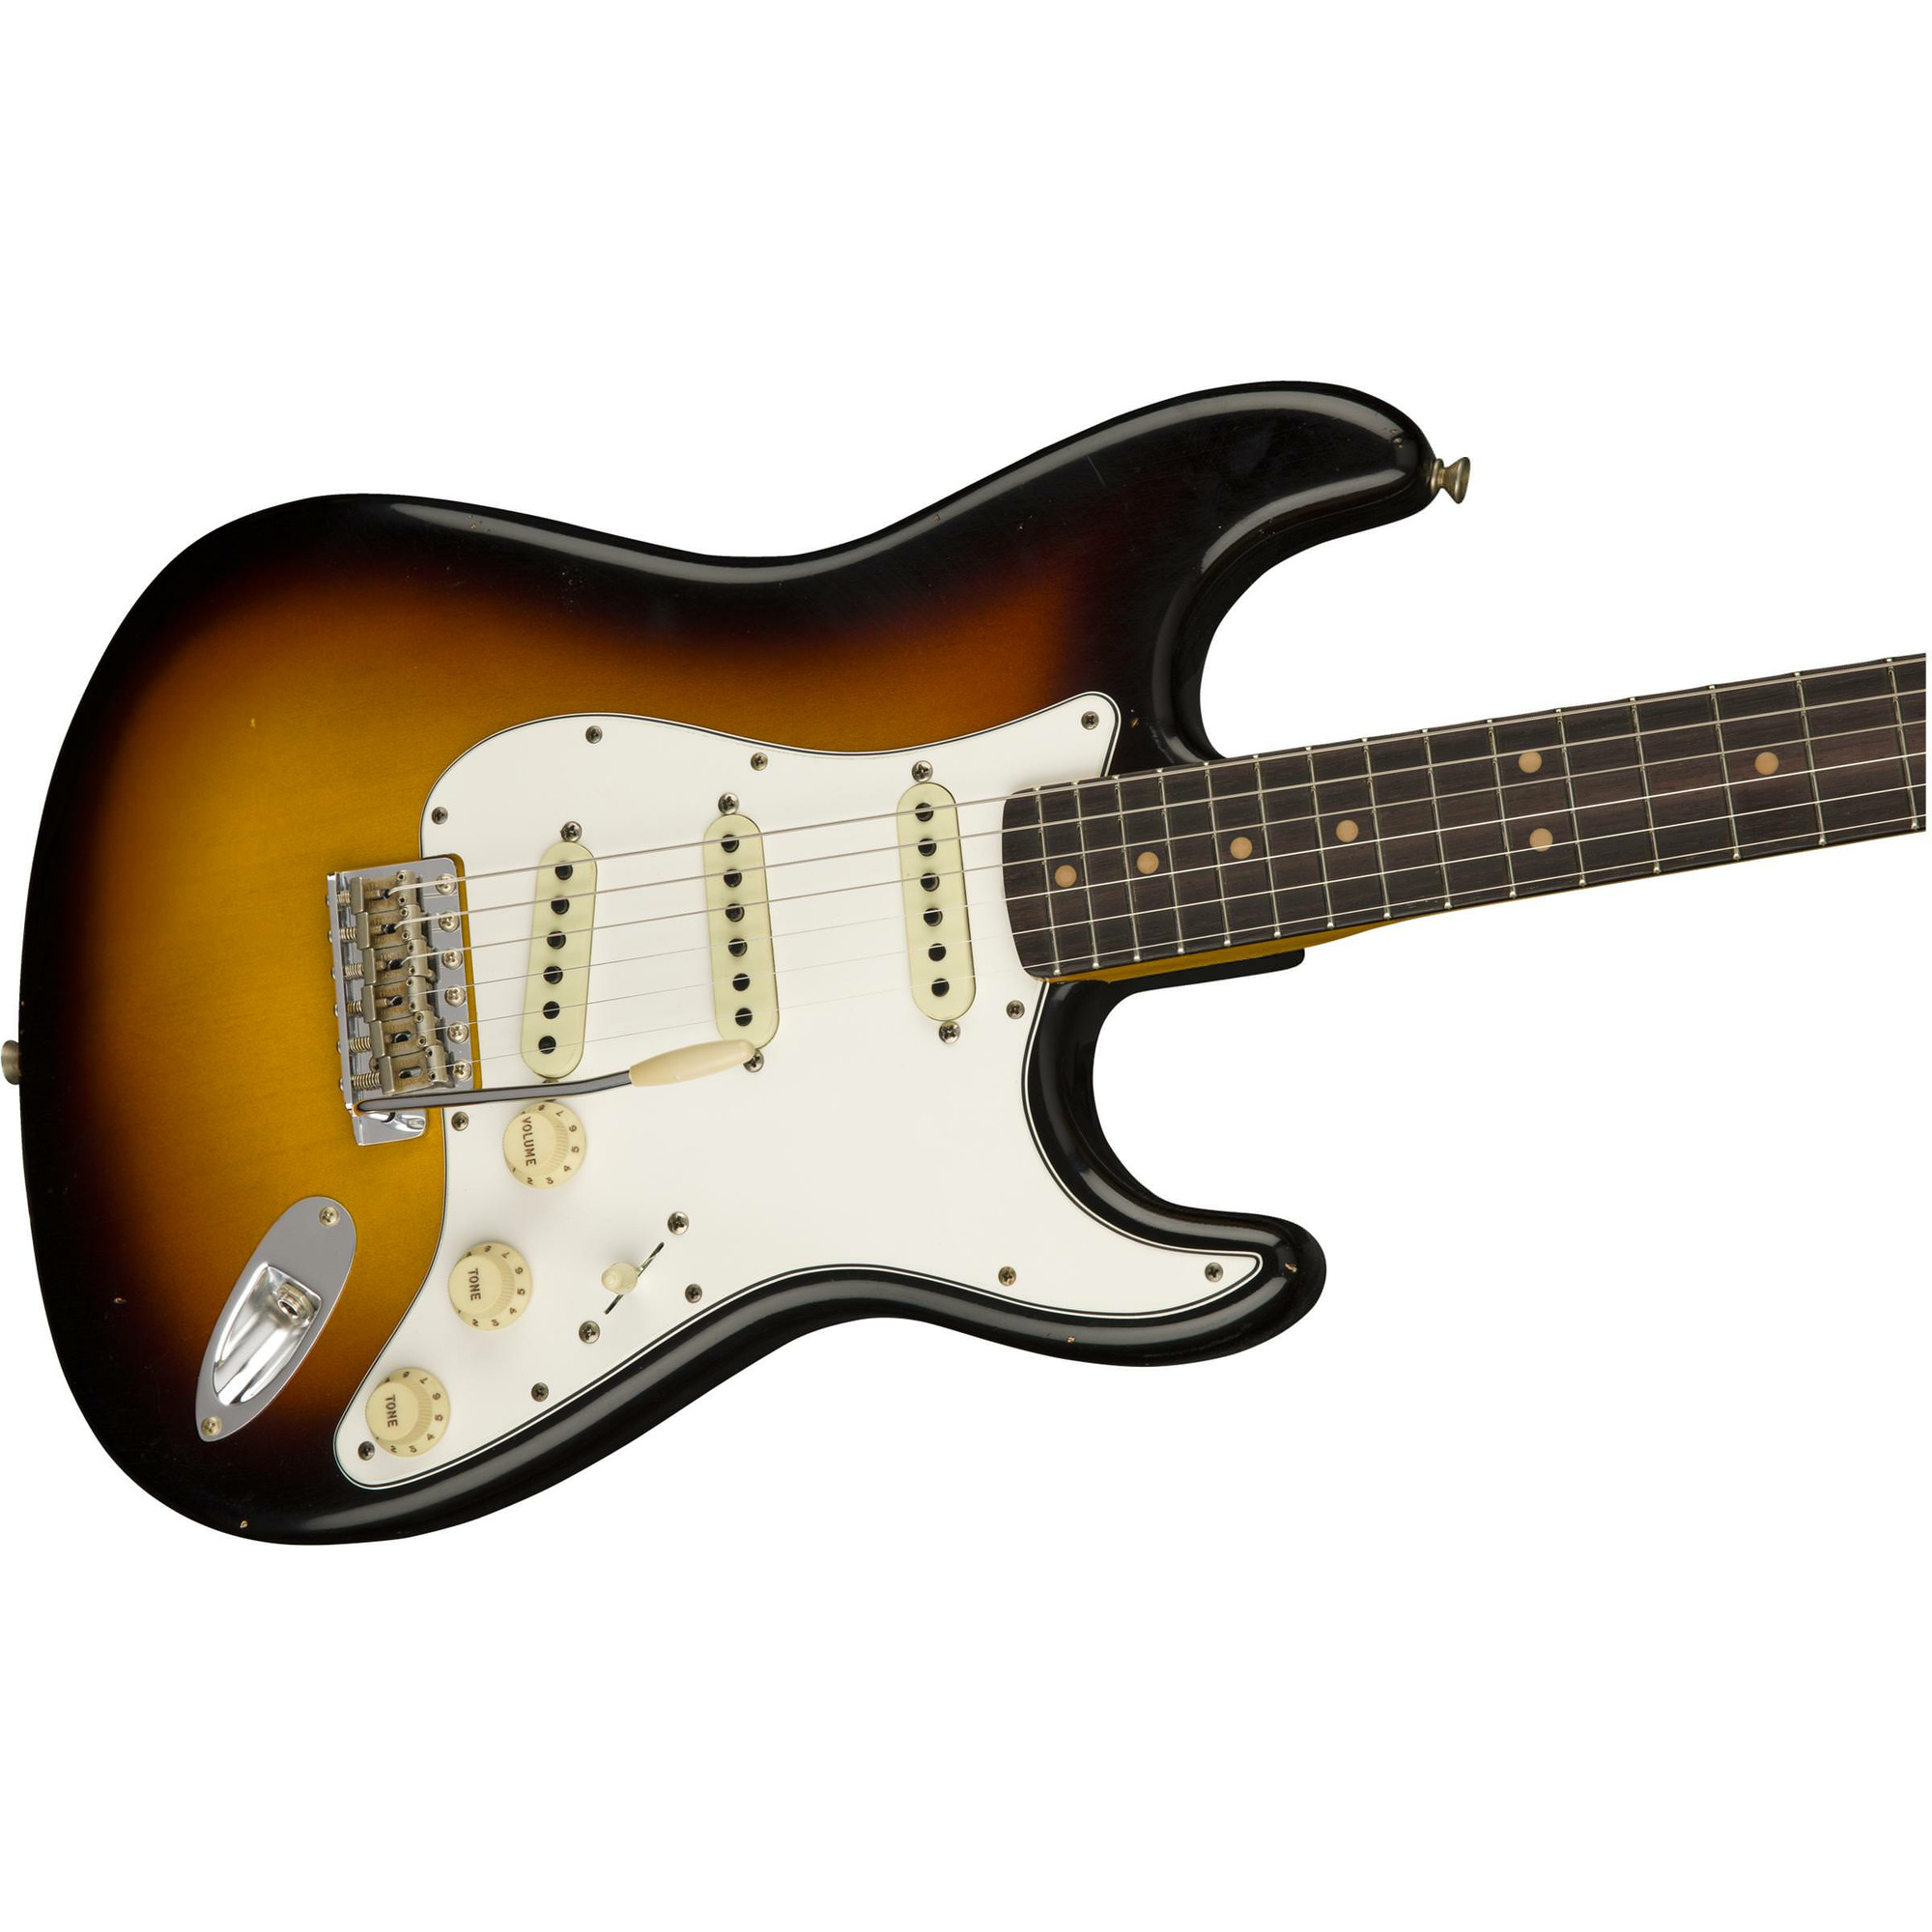 Stratocaster цена. Электрогитара Fender Squier Bullet. Гитара Squier by Fender. Электрогитара Fender Stratocaster. Электрогитара Fender Squier Stratocaster.